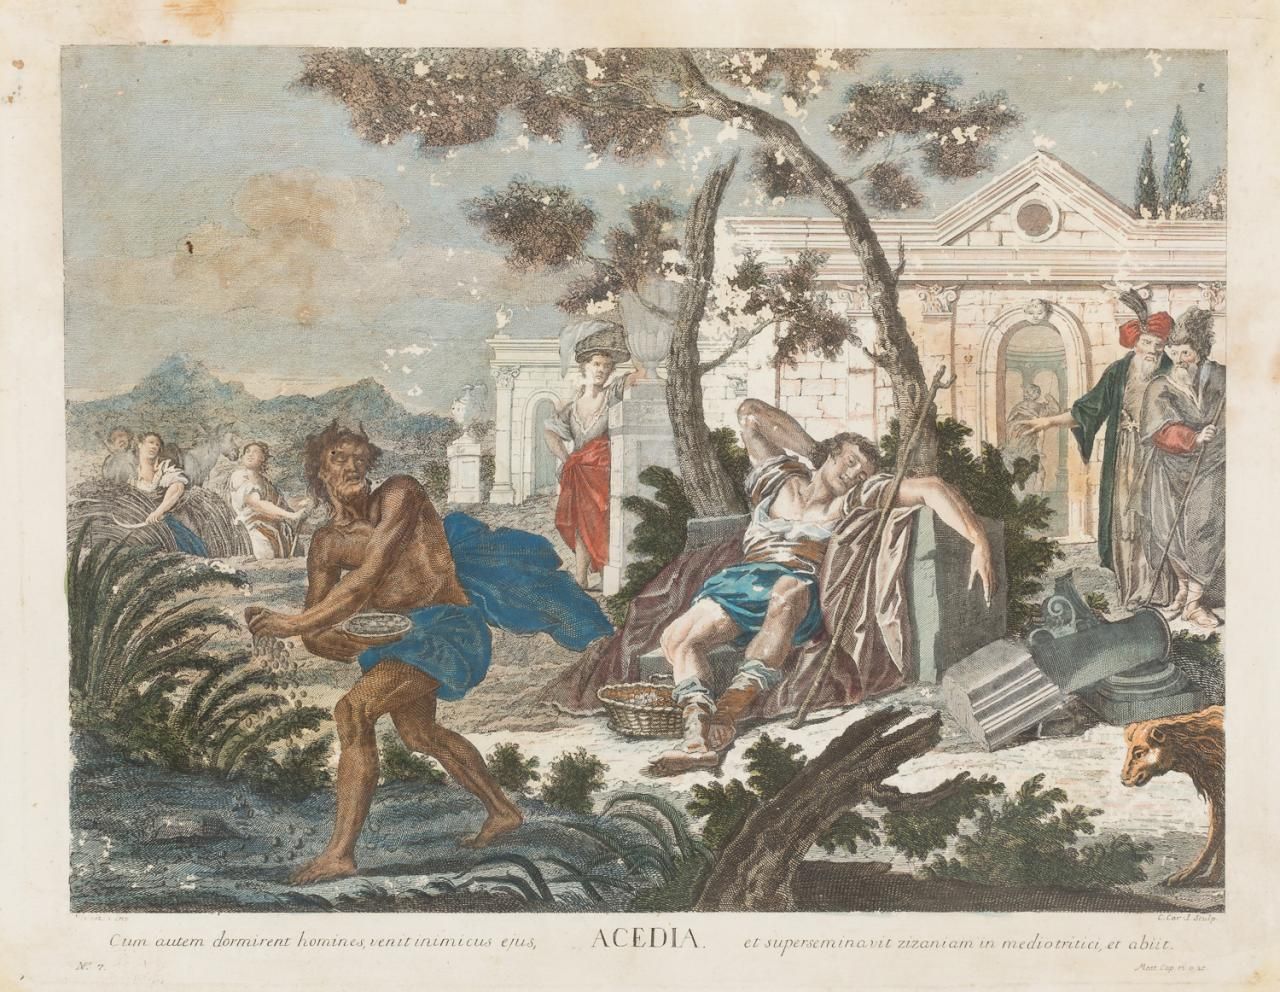 ESCUELA ITALIANA, S. XVIII Acedia
Engraving illuminated
43,5 x 55,5 cm
Series of&hellip;